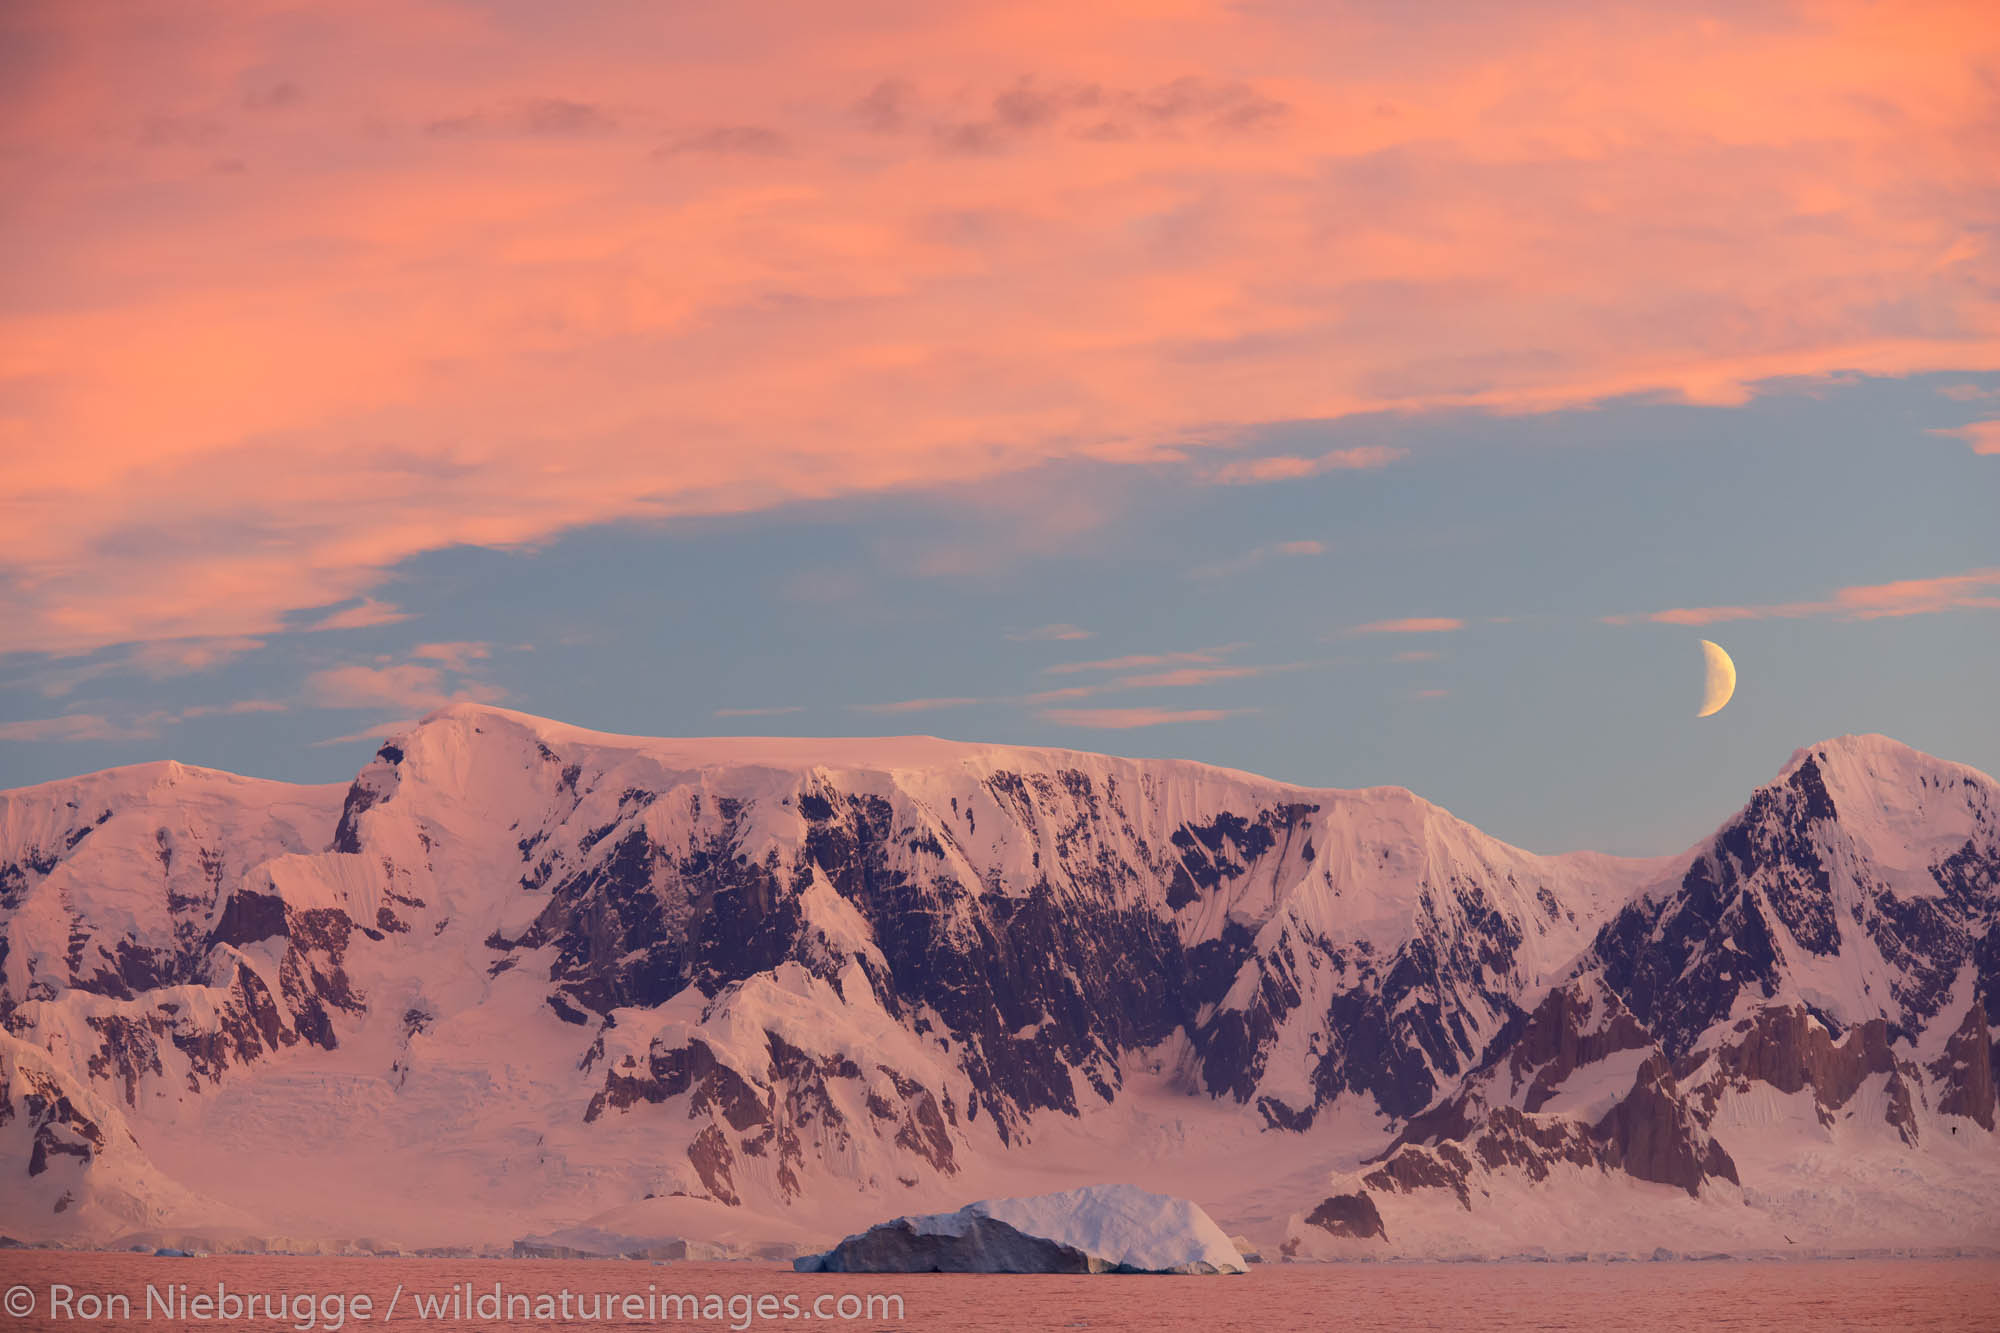 Sunset / sunrise as we travel below the Antarctic Circle, Antarctica.